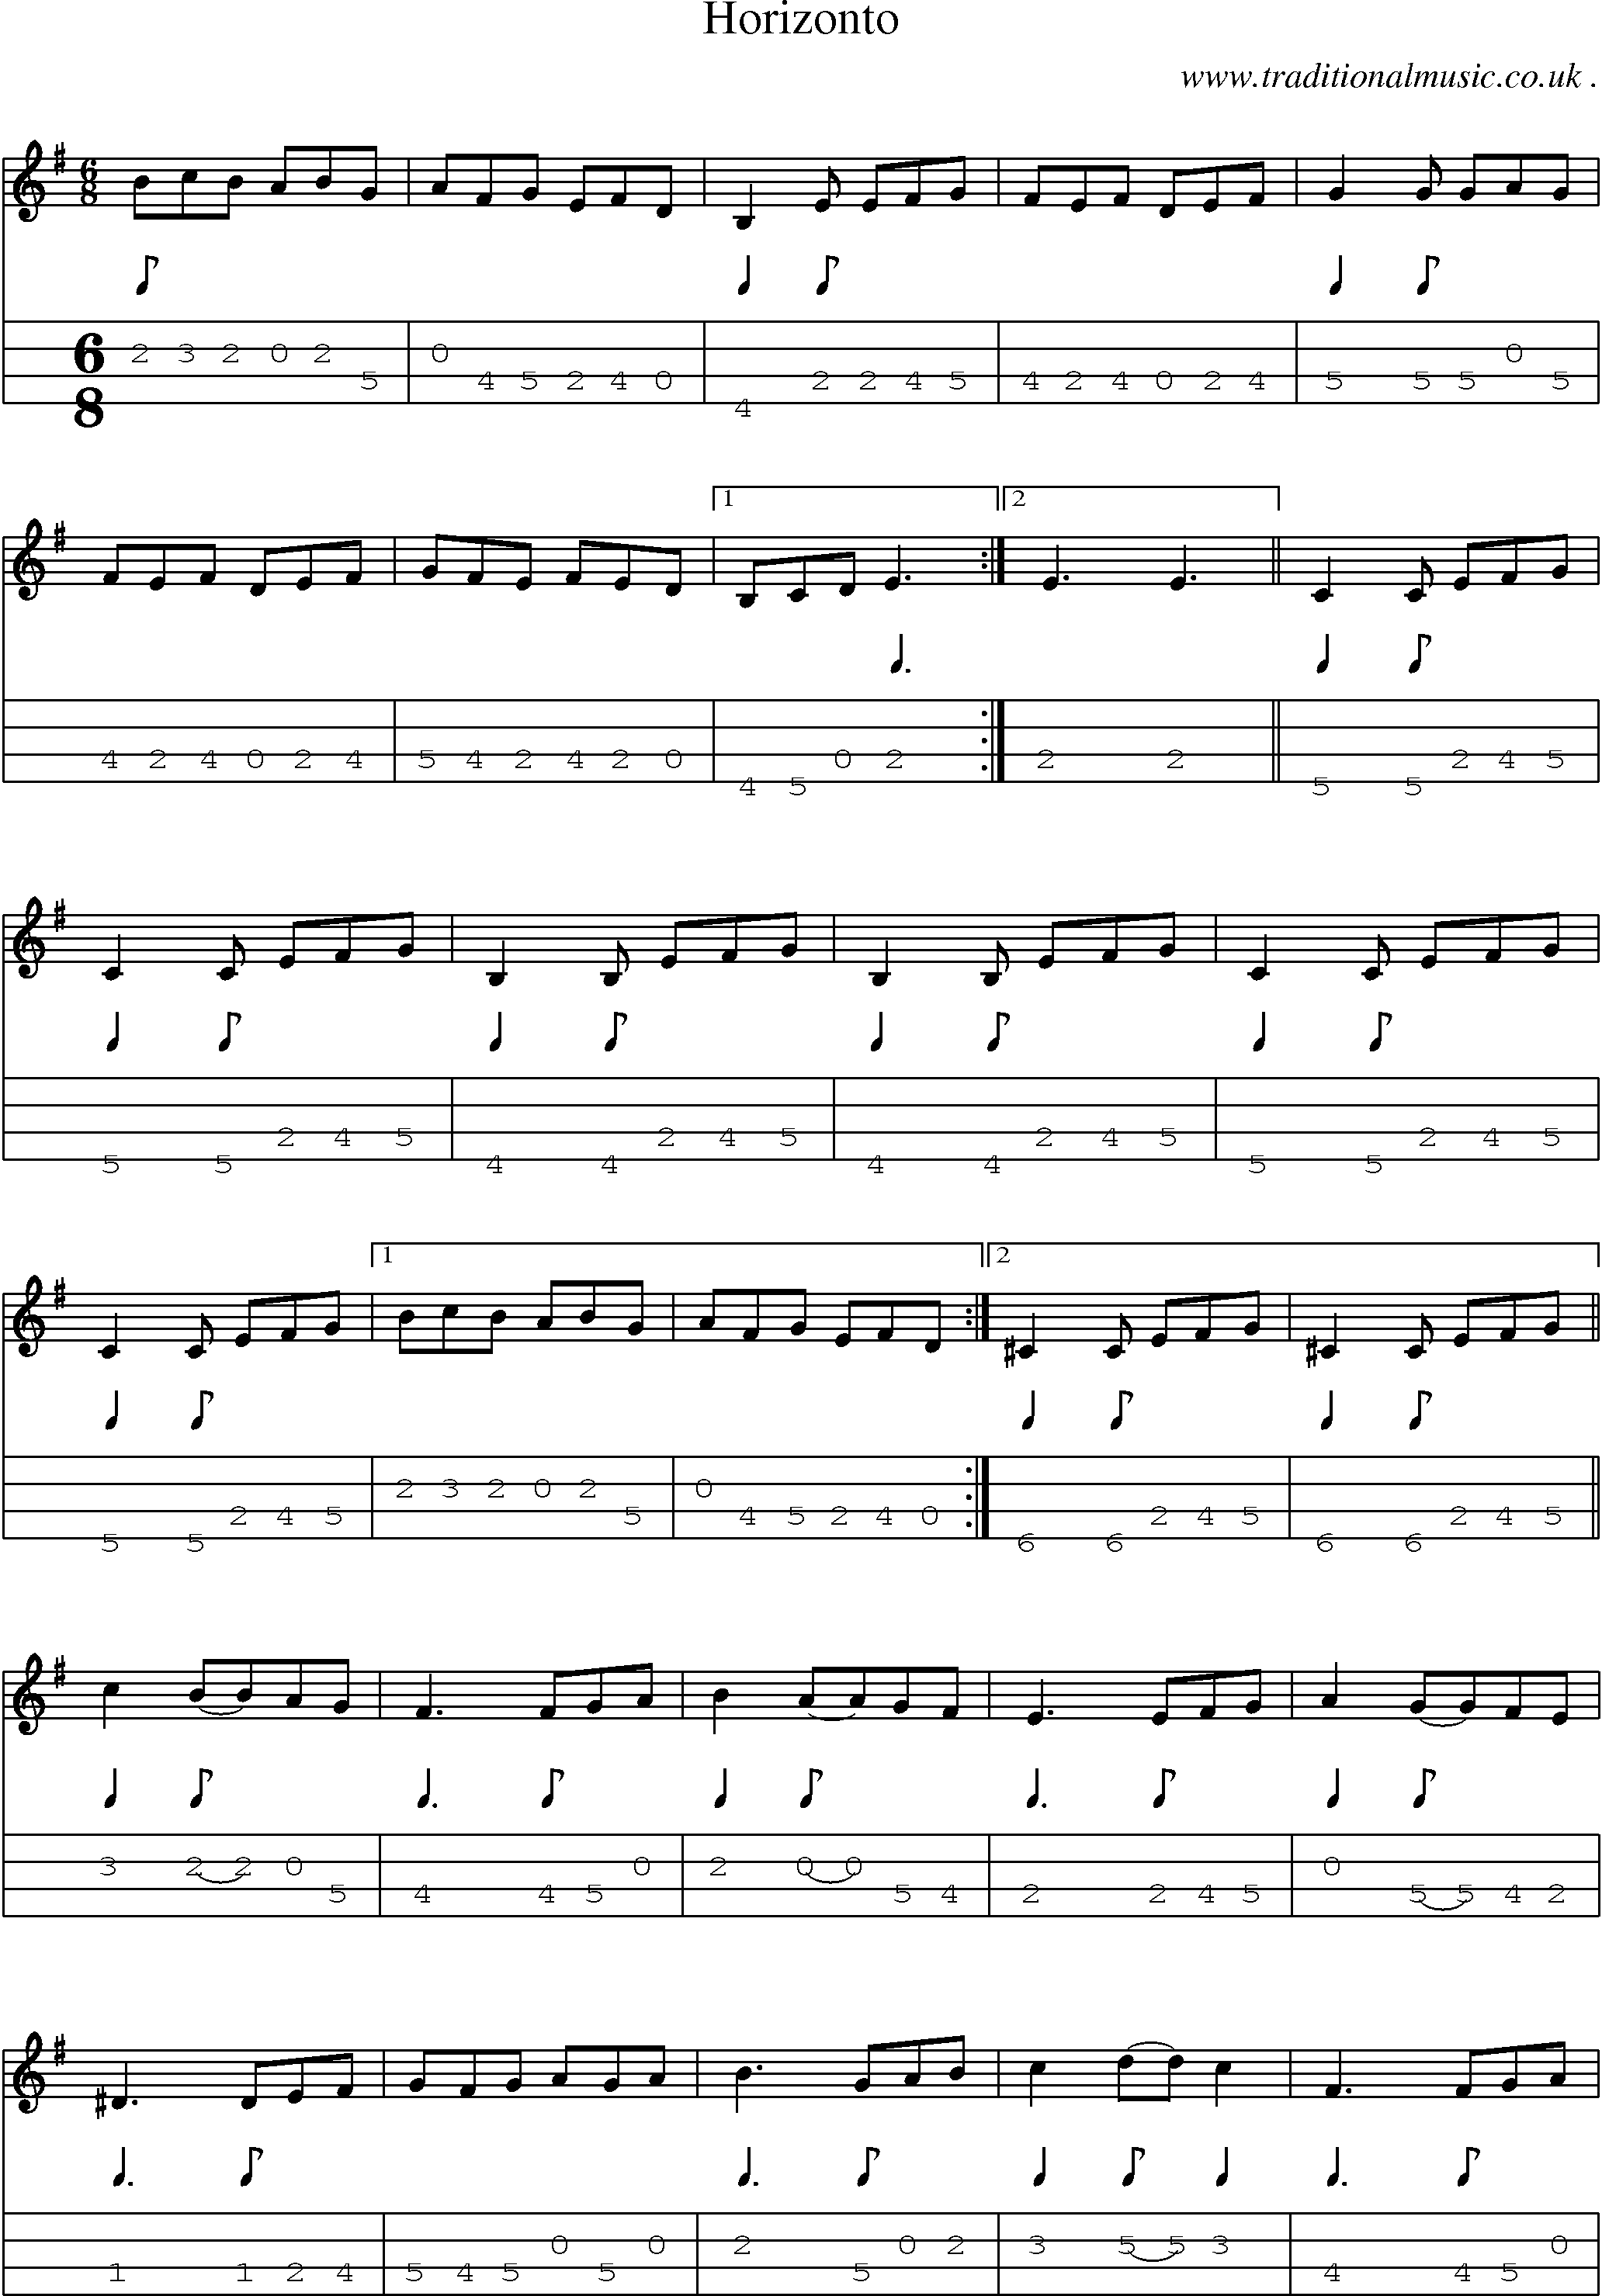 Sheet-Music and Mandolin Tabs for Horizonto